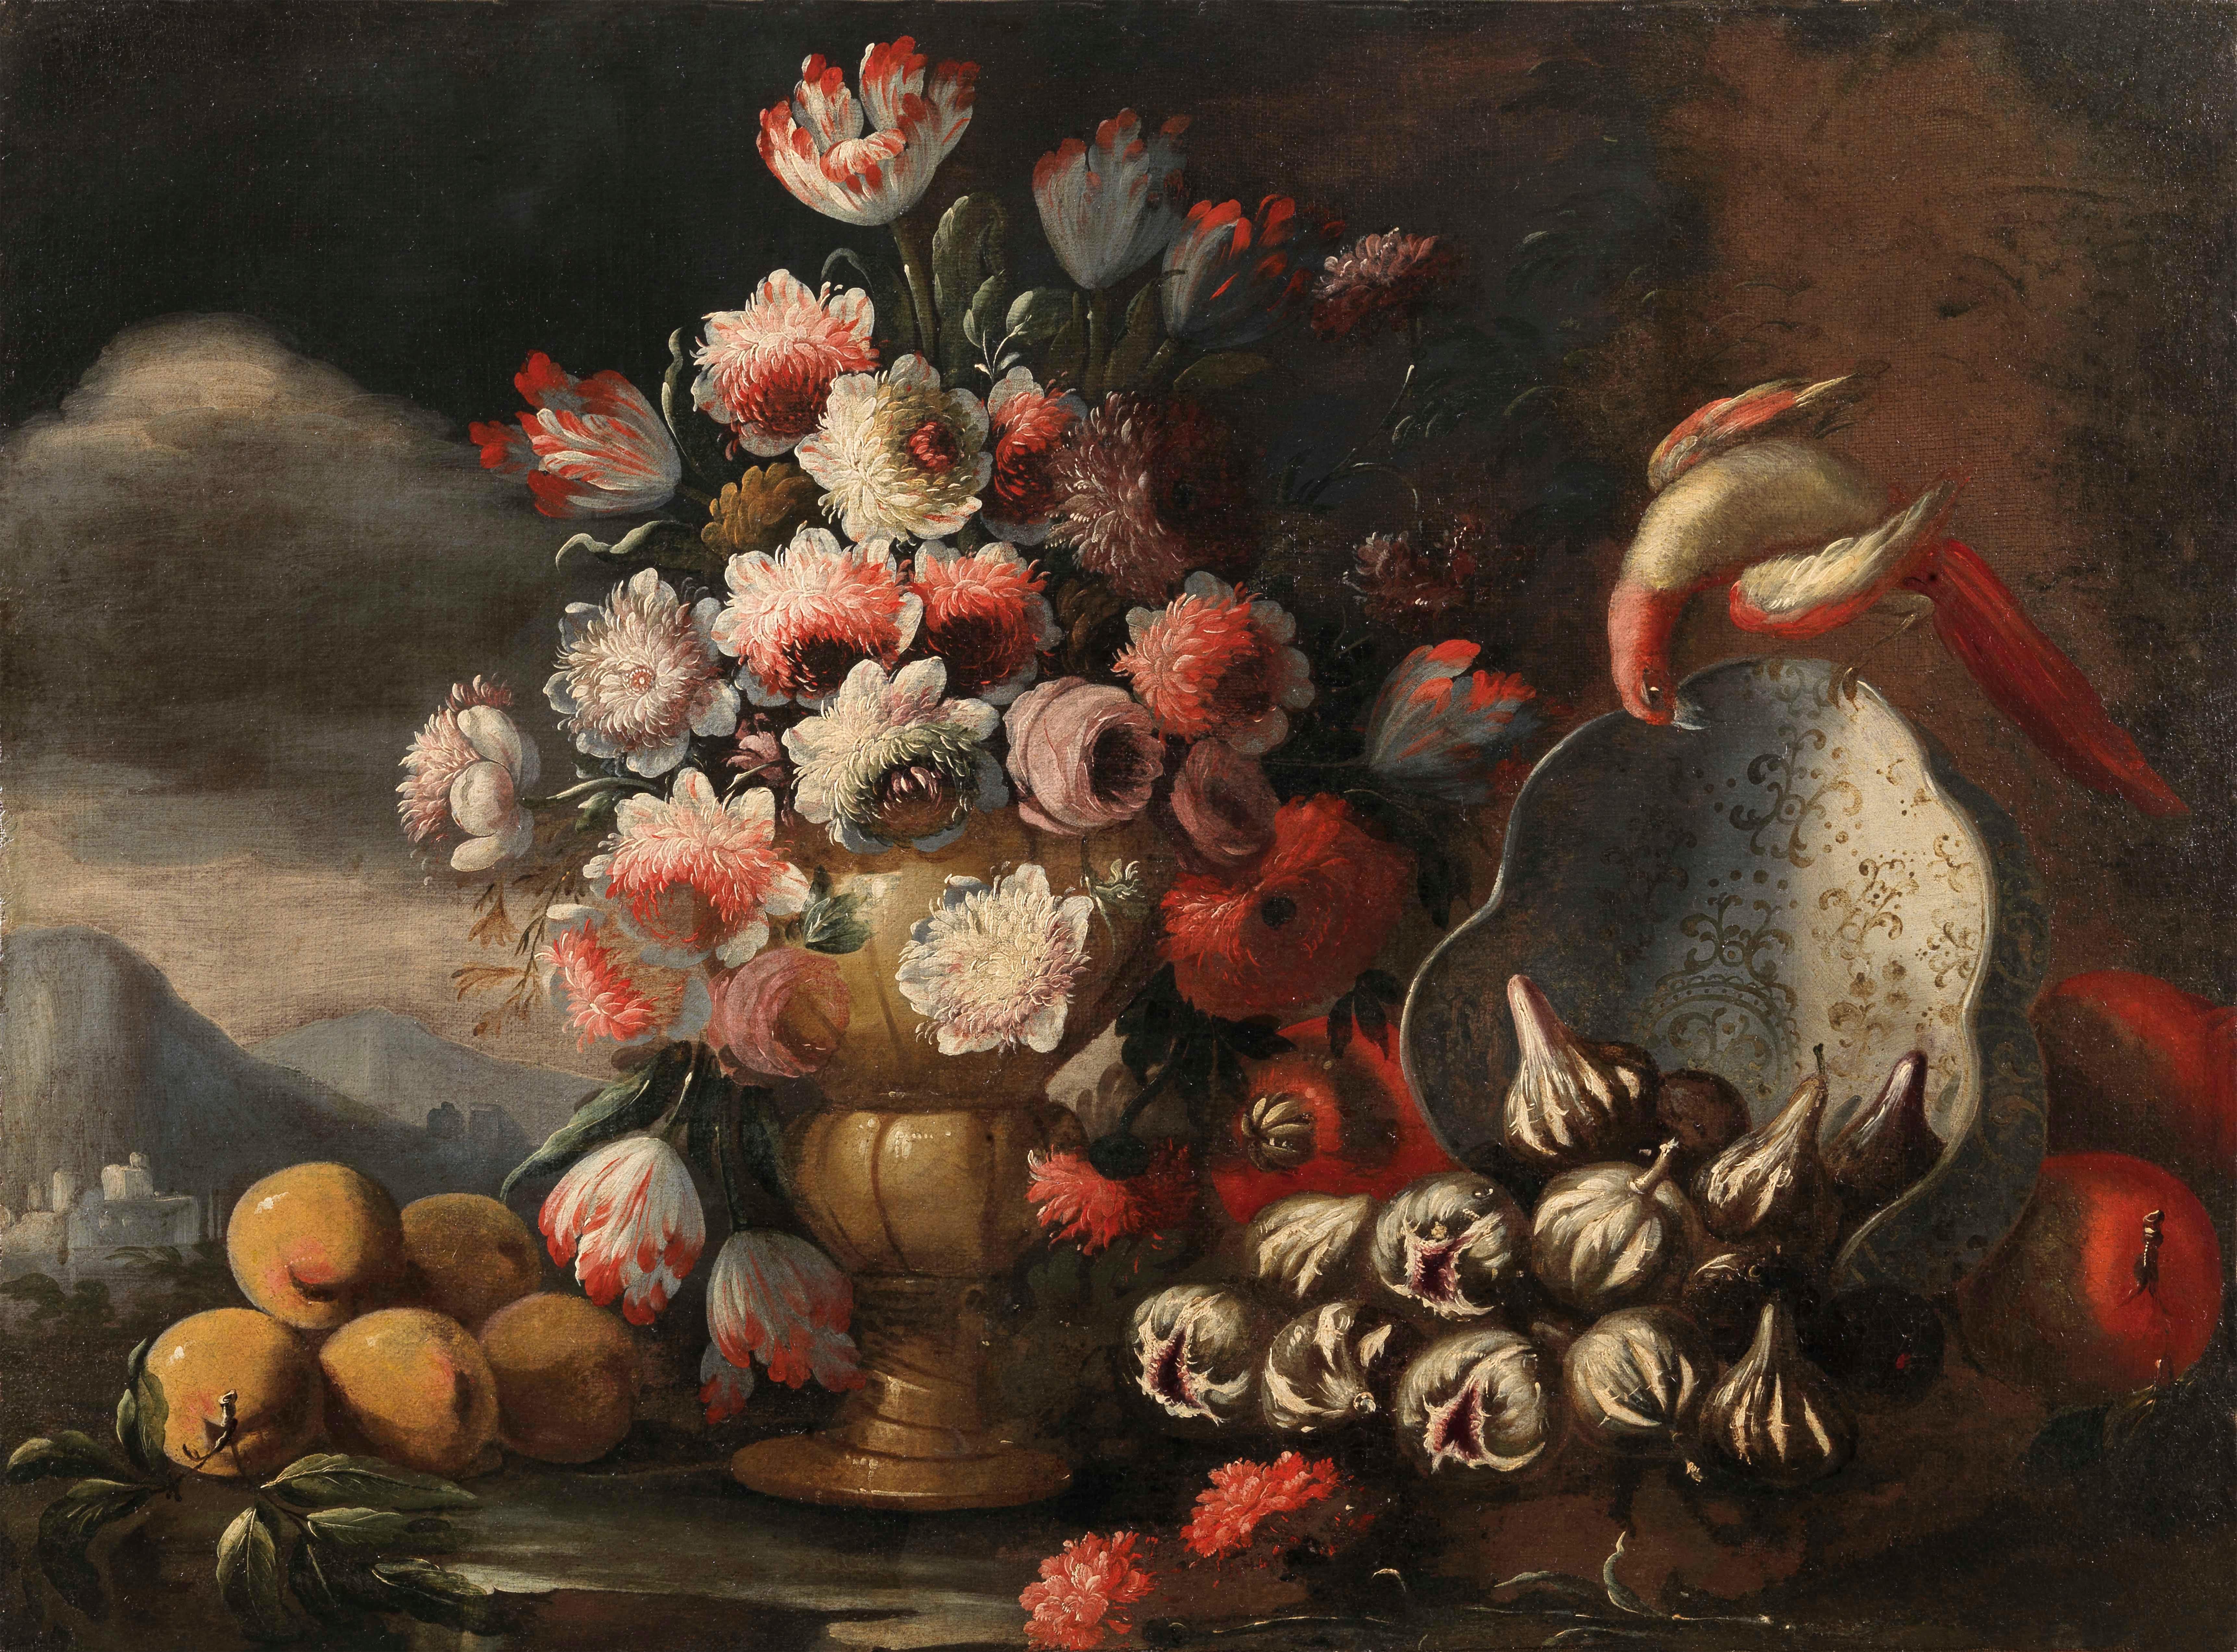 18th century still life paintings